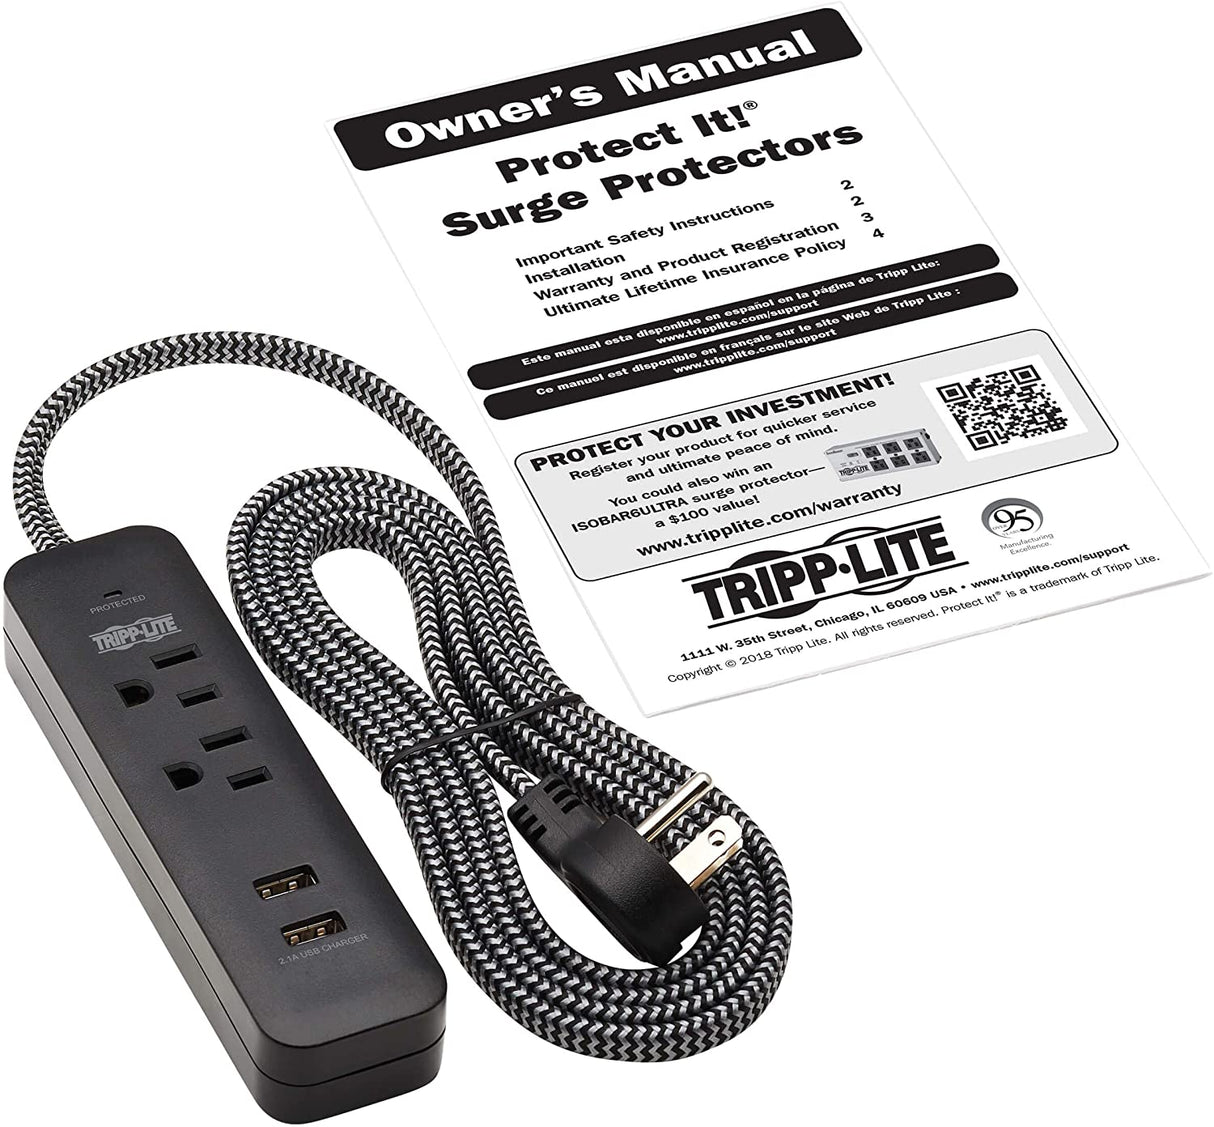 Tripp Lite Surge Protector Power Strip 2-Outlet w 2 USB Ports 2.1A 6ft Cord, 5-15P Plug, 450 Joules, Black (TLP206USB)